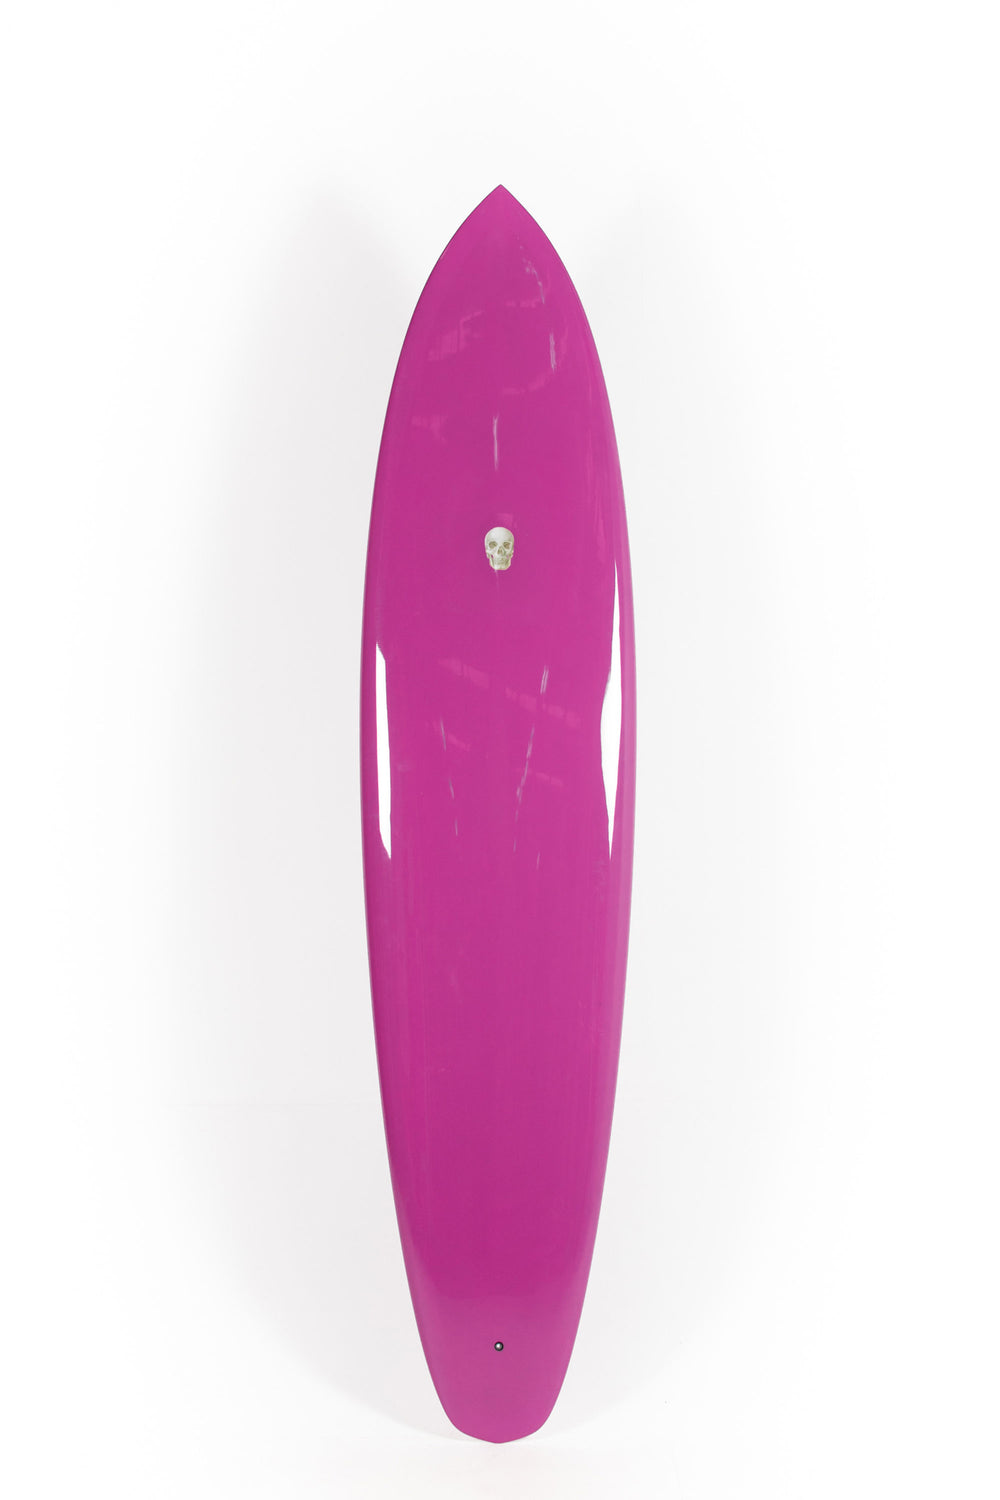 Pukas Surf Shop - Christenson Surfboards - ULTRA TRACKER - 8'0